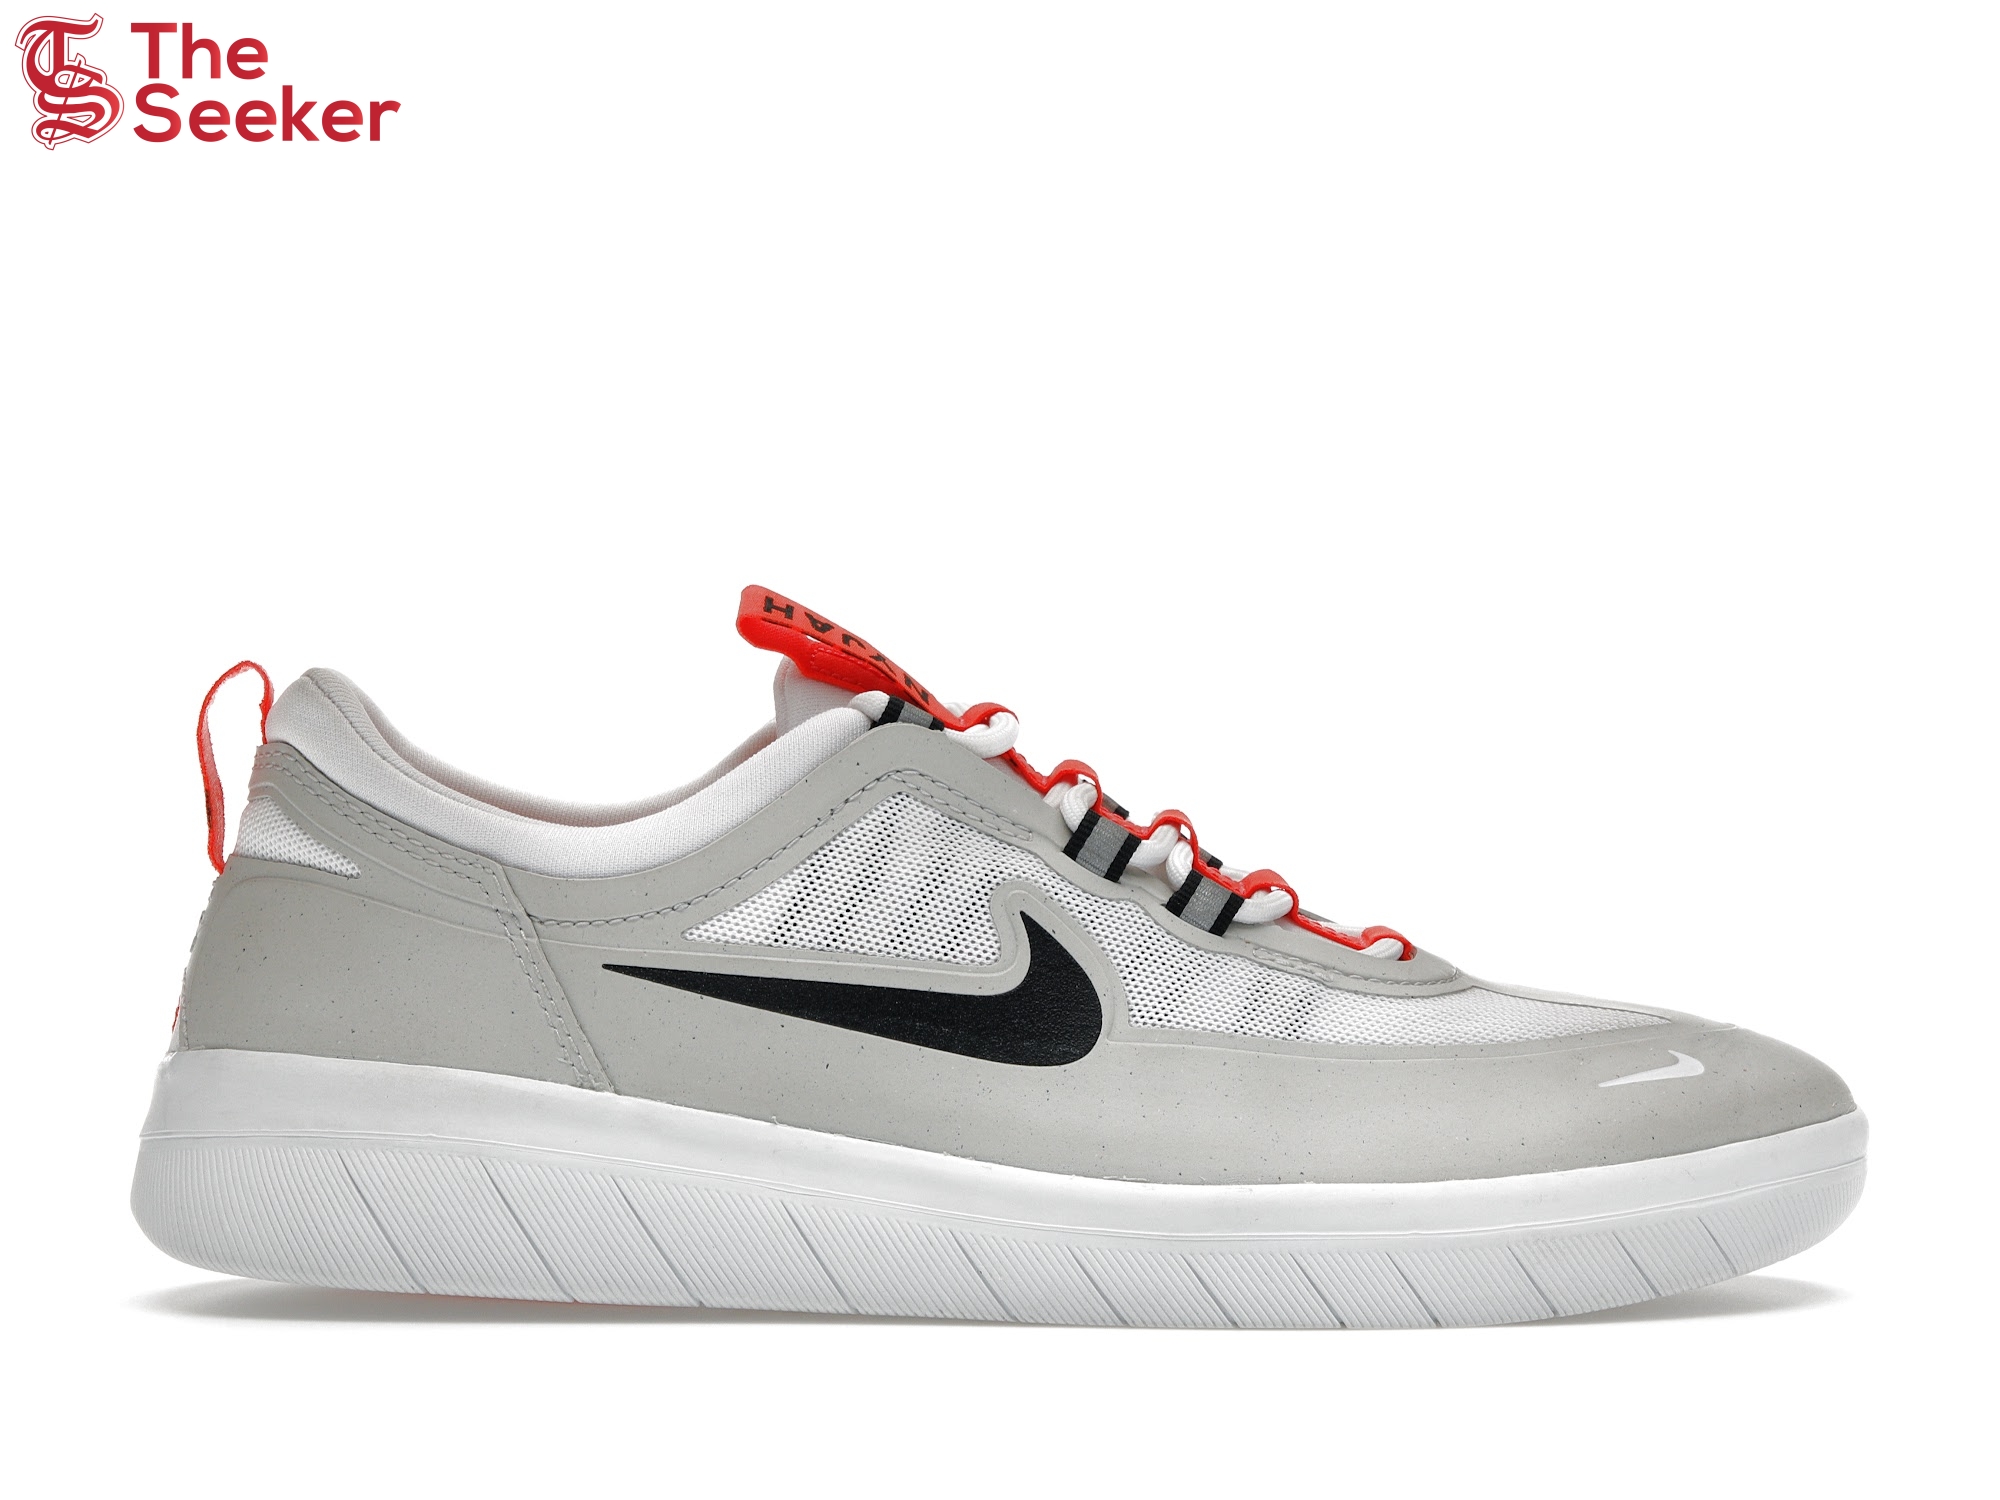 Nike SB Nyjah Free 2 Neutral Grey Bright Crimson